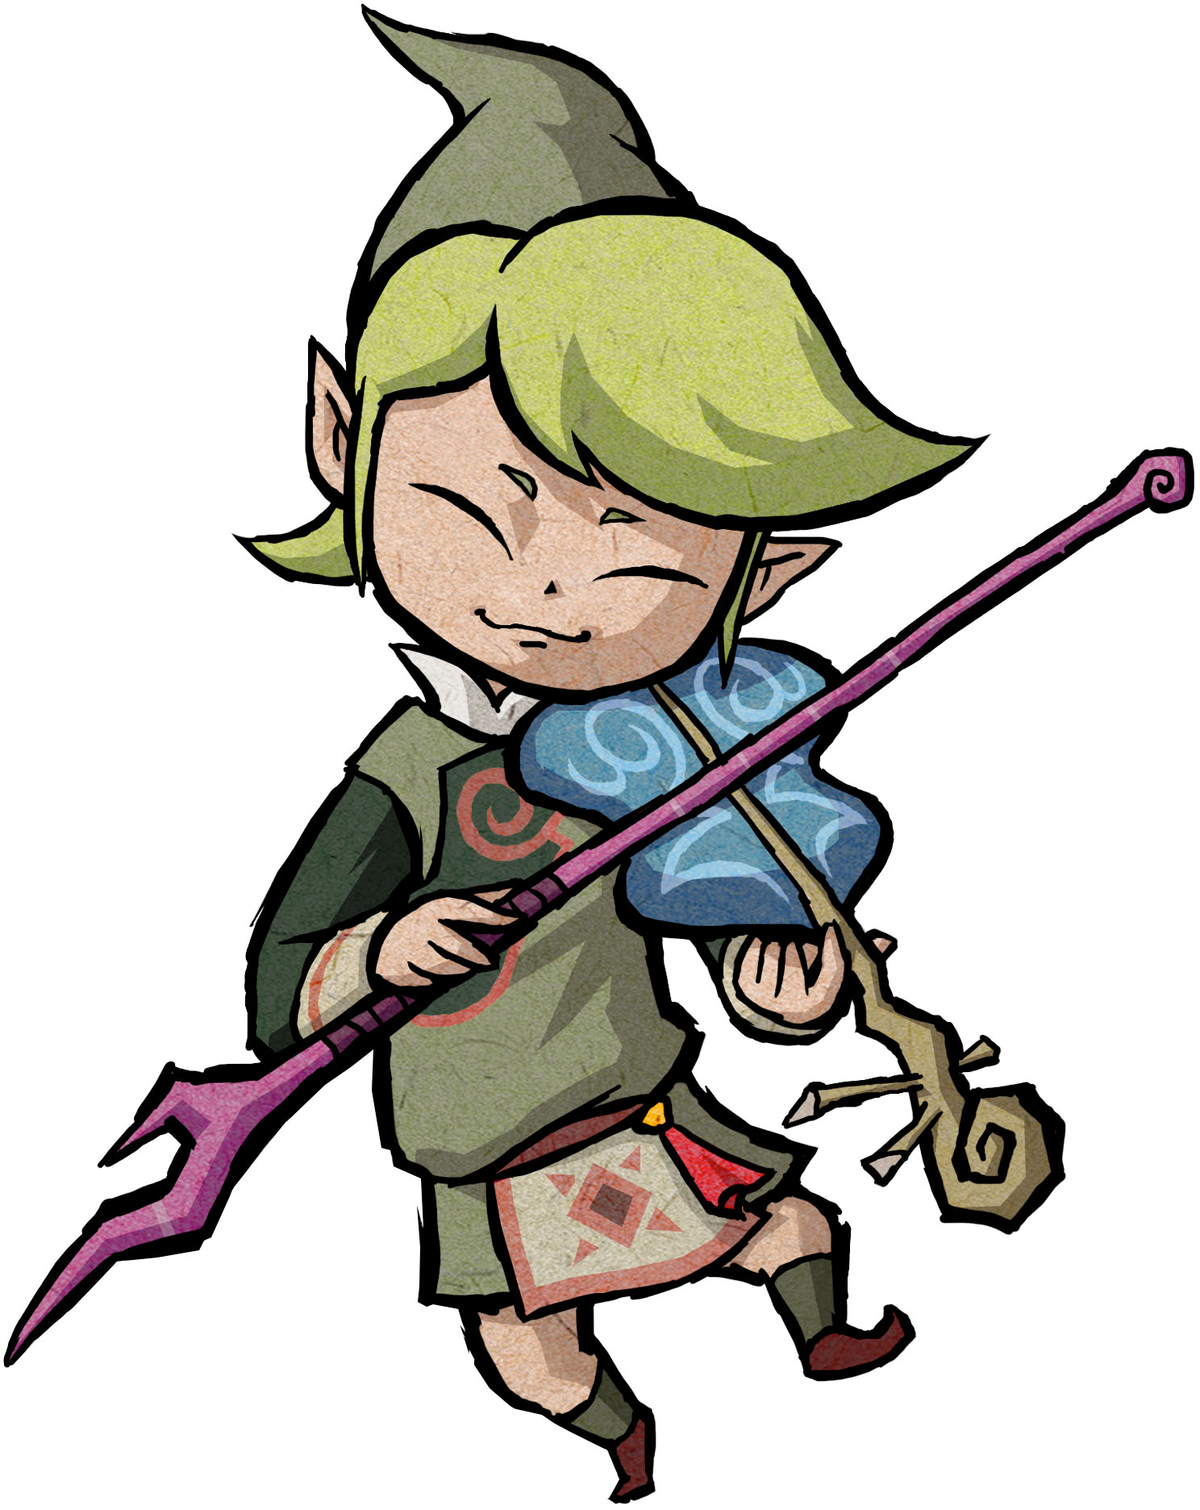 Fado (Ocarina of Time) - Zelda Wiki